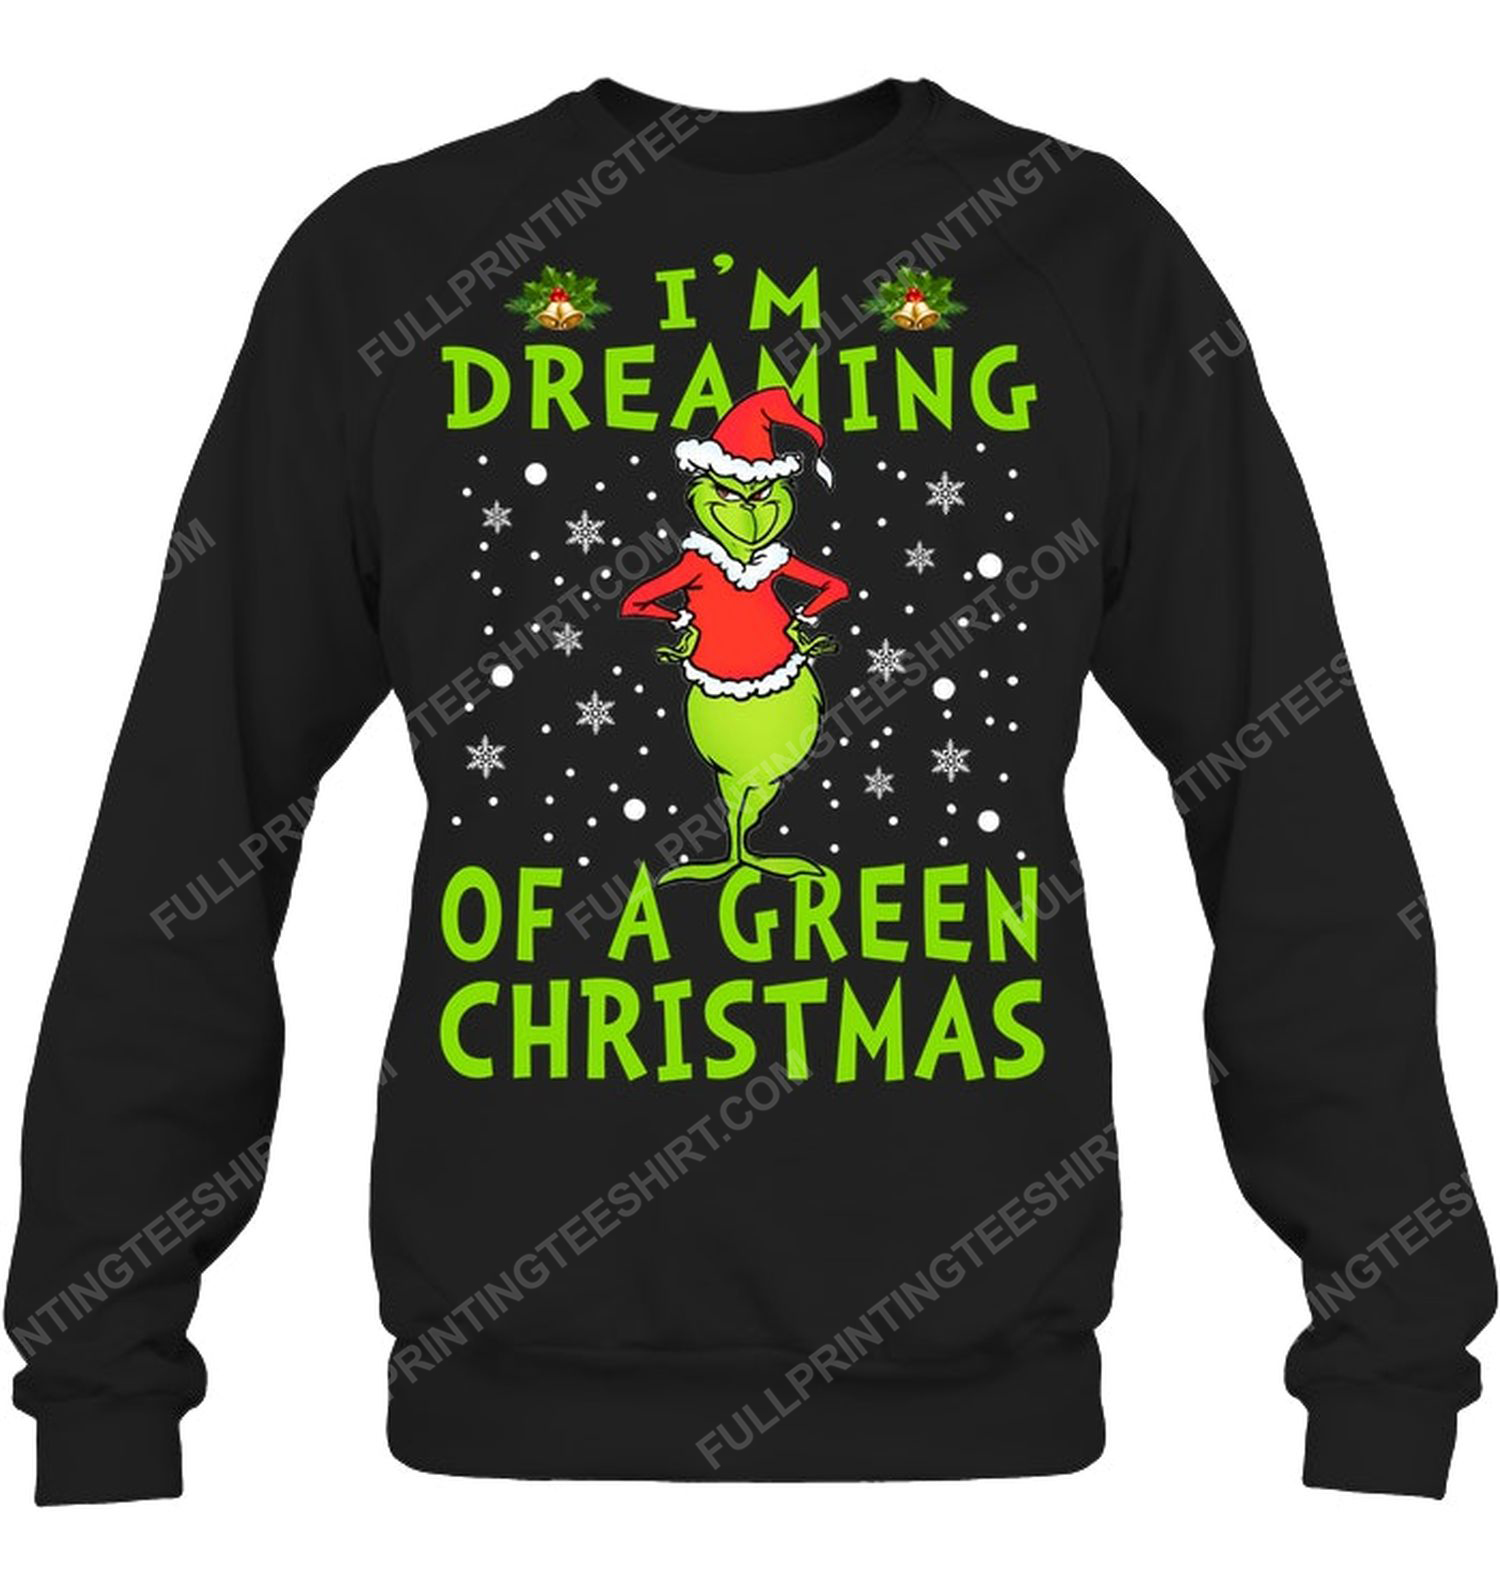 Christmas time i'm dreaming of a green christmas sweatshirt